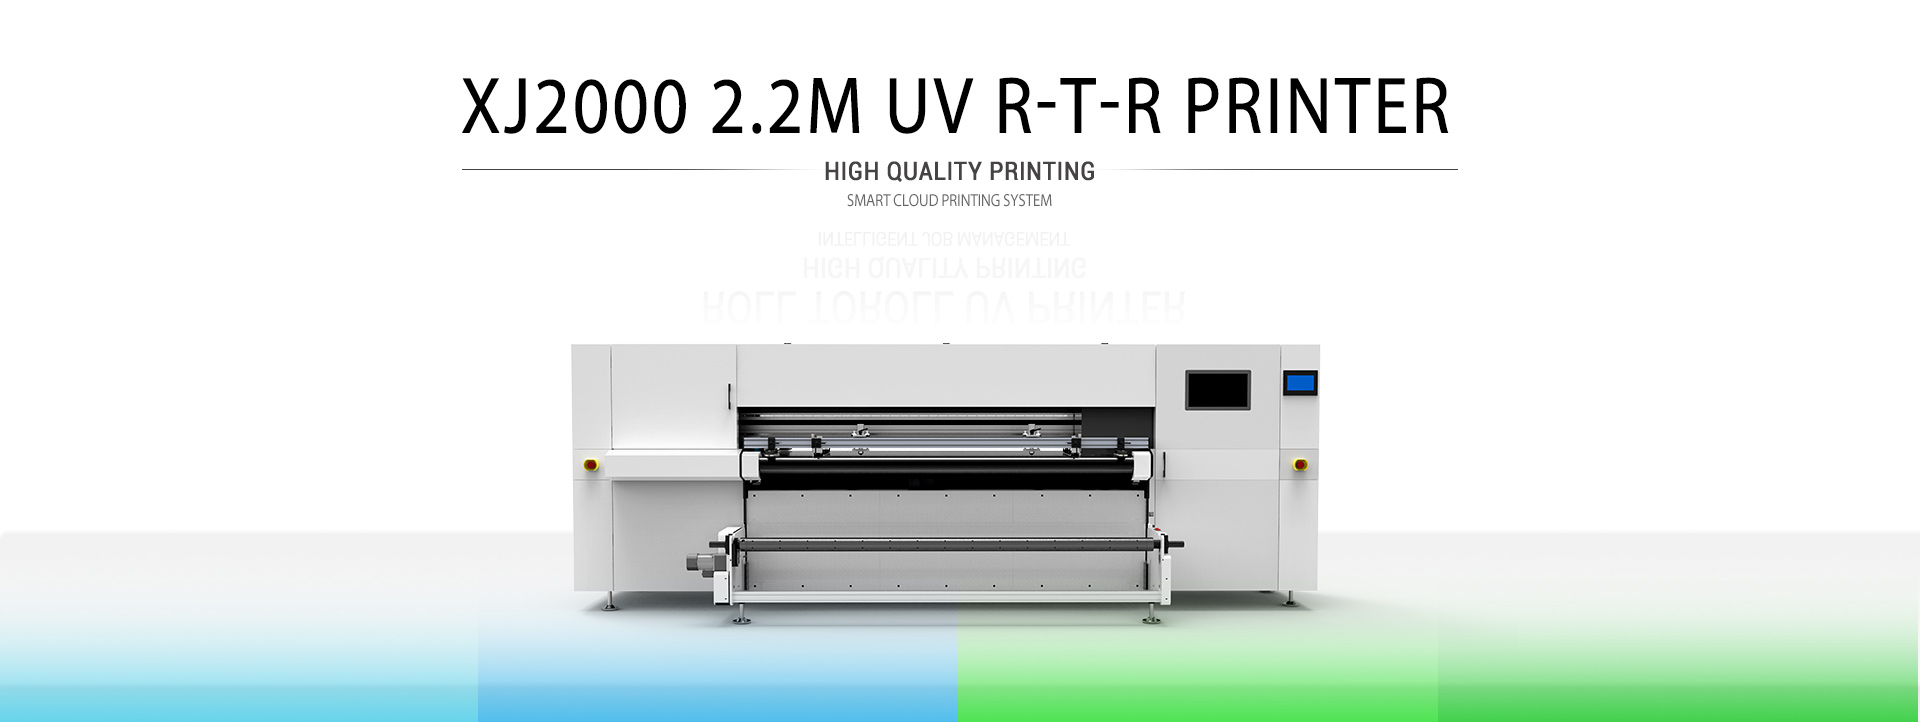 Xenons XJ2000 UV roll-to-roll printer